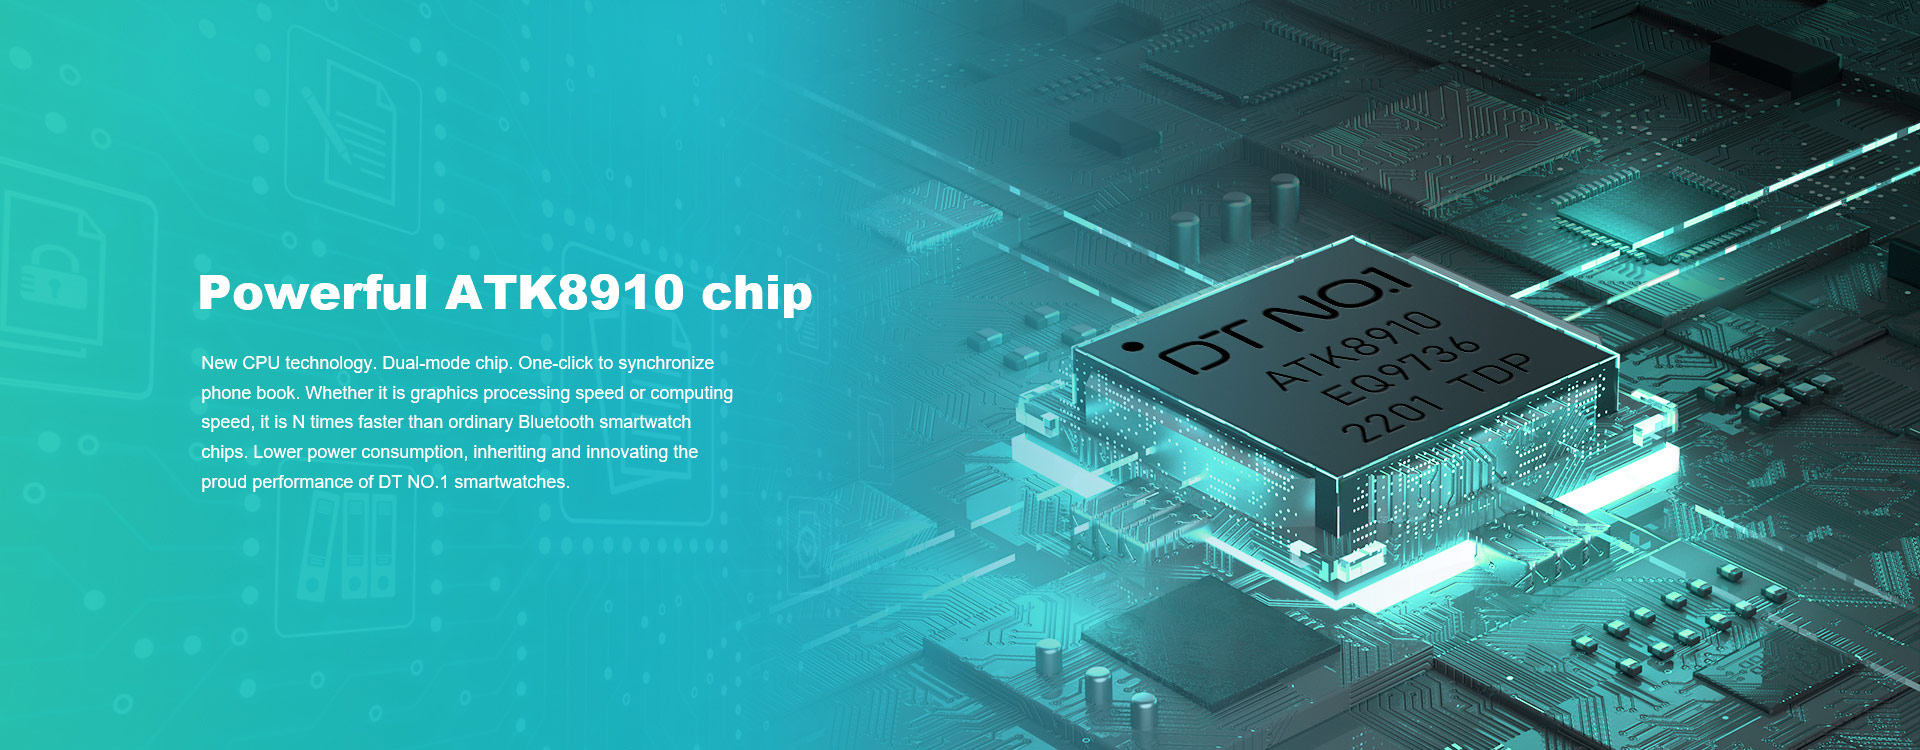 Powerful ATK8910 chip